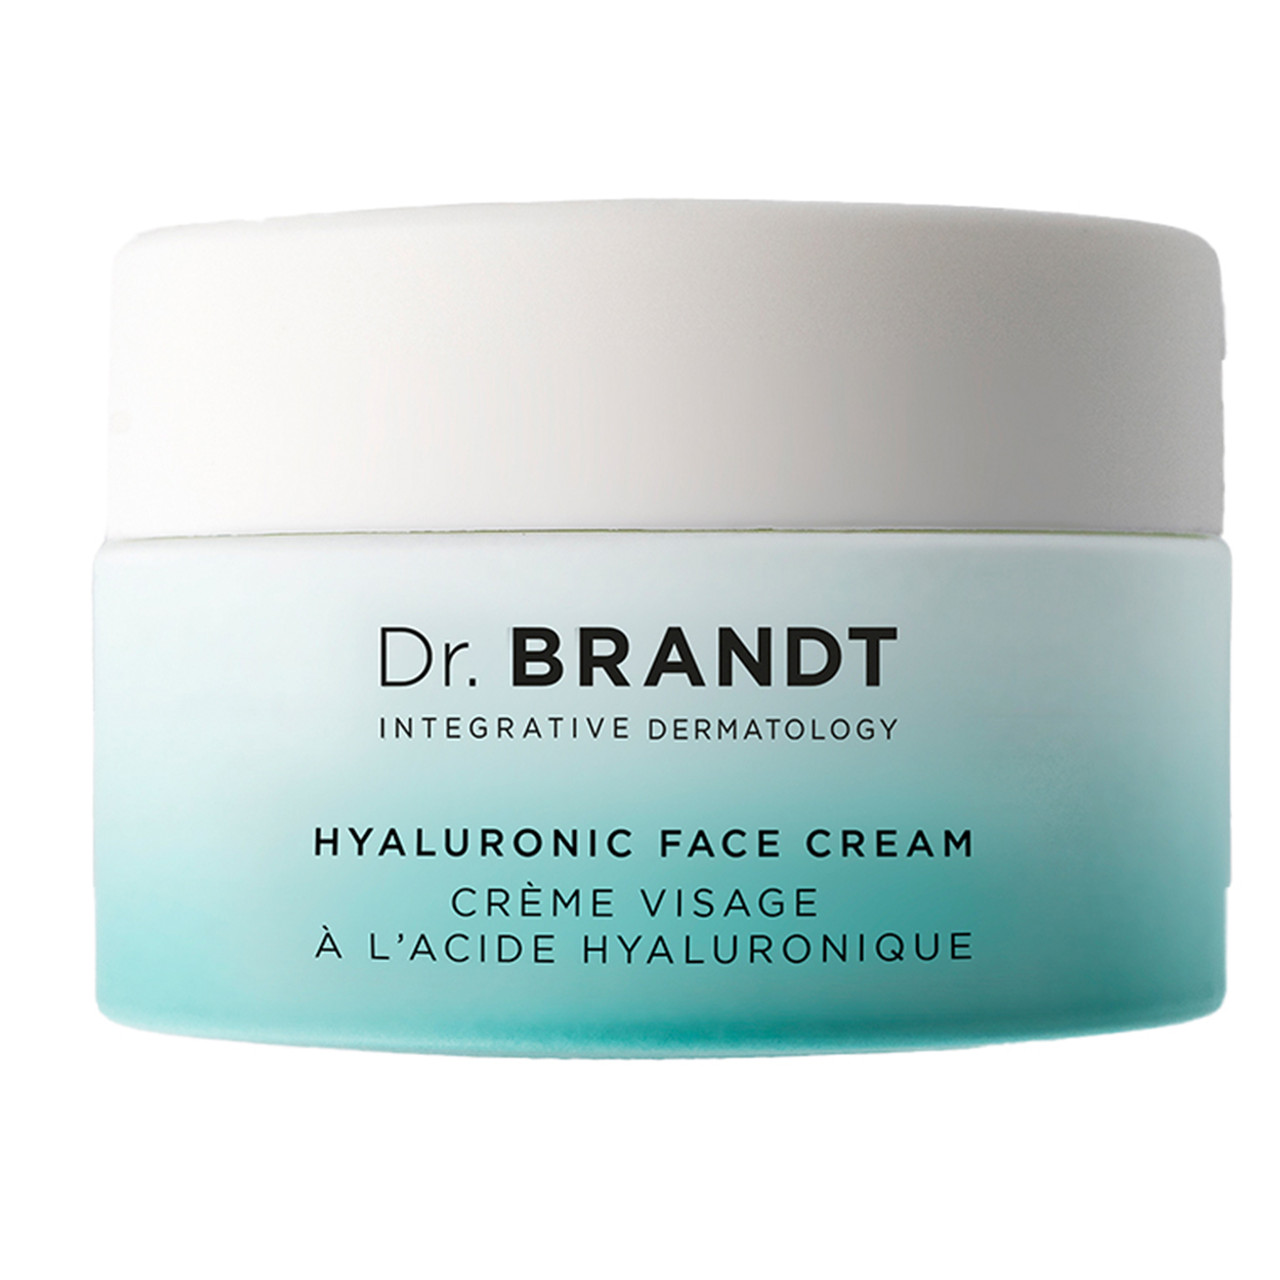 Dr. Brandt Needles No More Hyaluronic Face Cream - 1.7 oz 